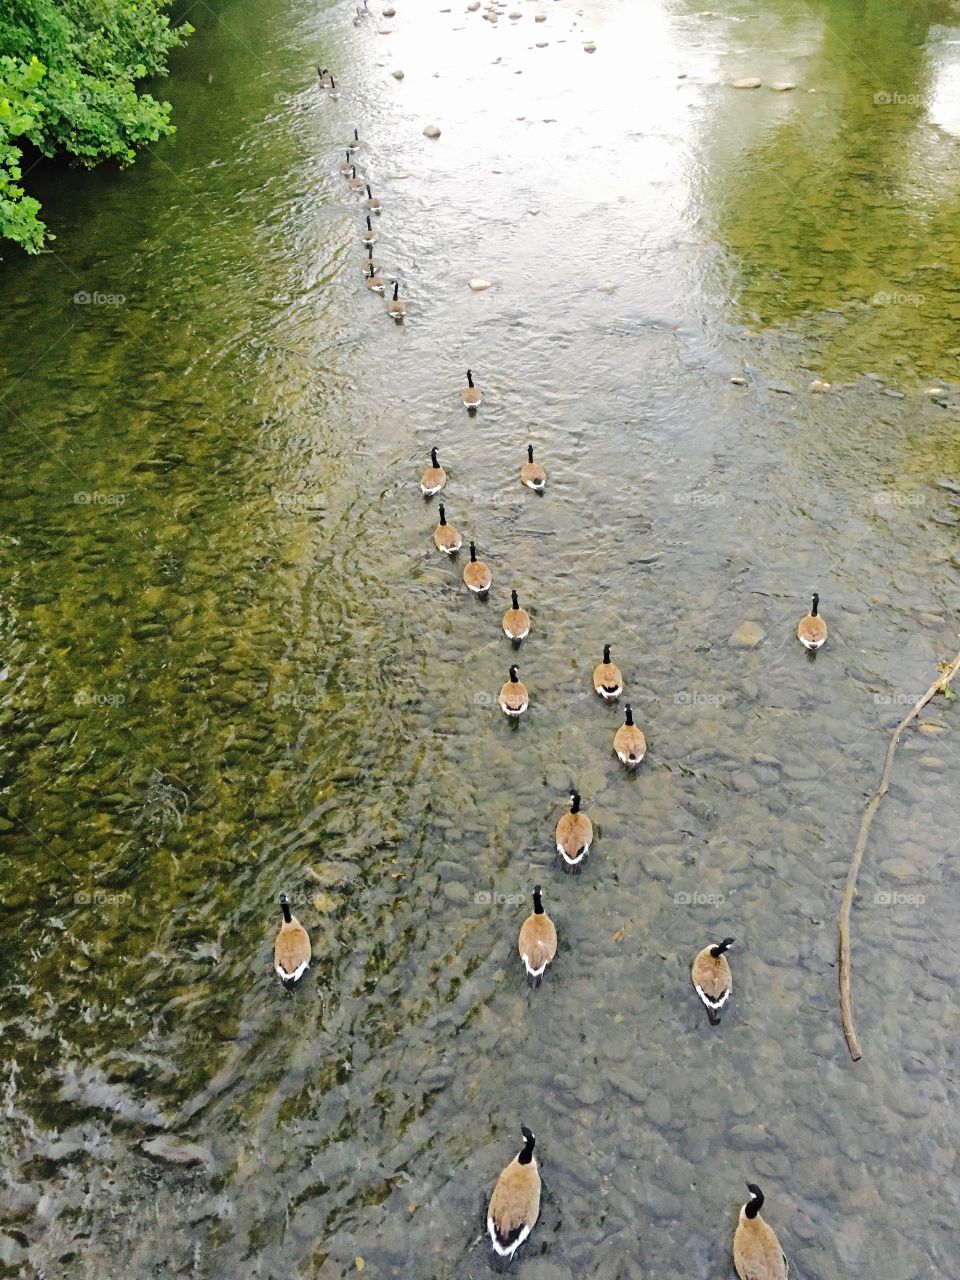 Floating geese